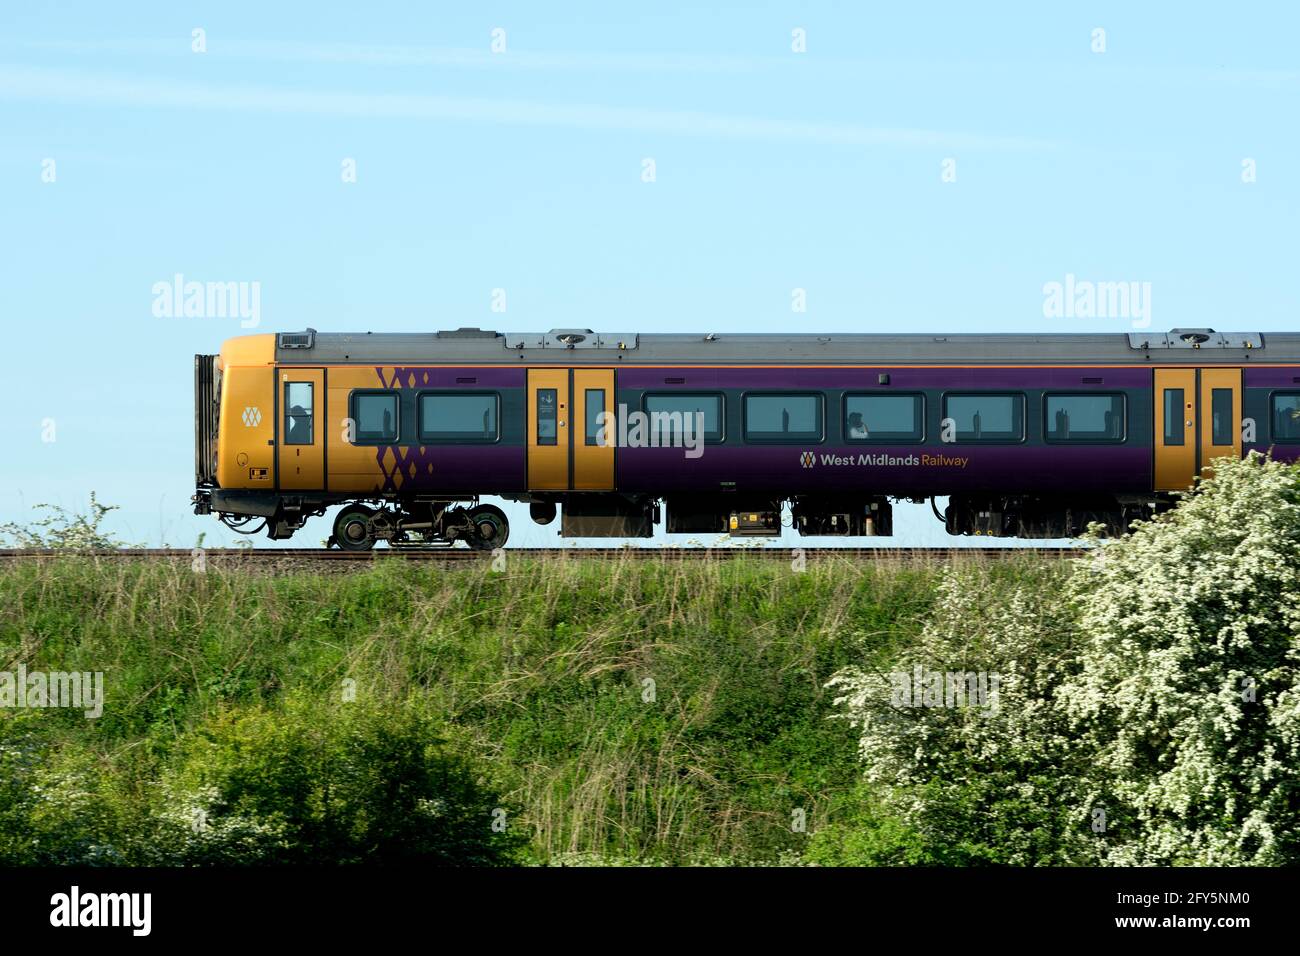 West Midlands Railway class 172 diesel train, side view in spring, Warwickshire, UK Stock Photo